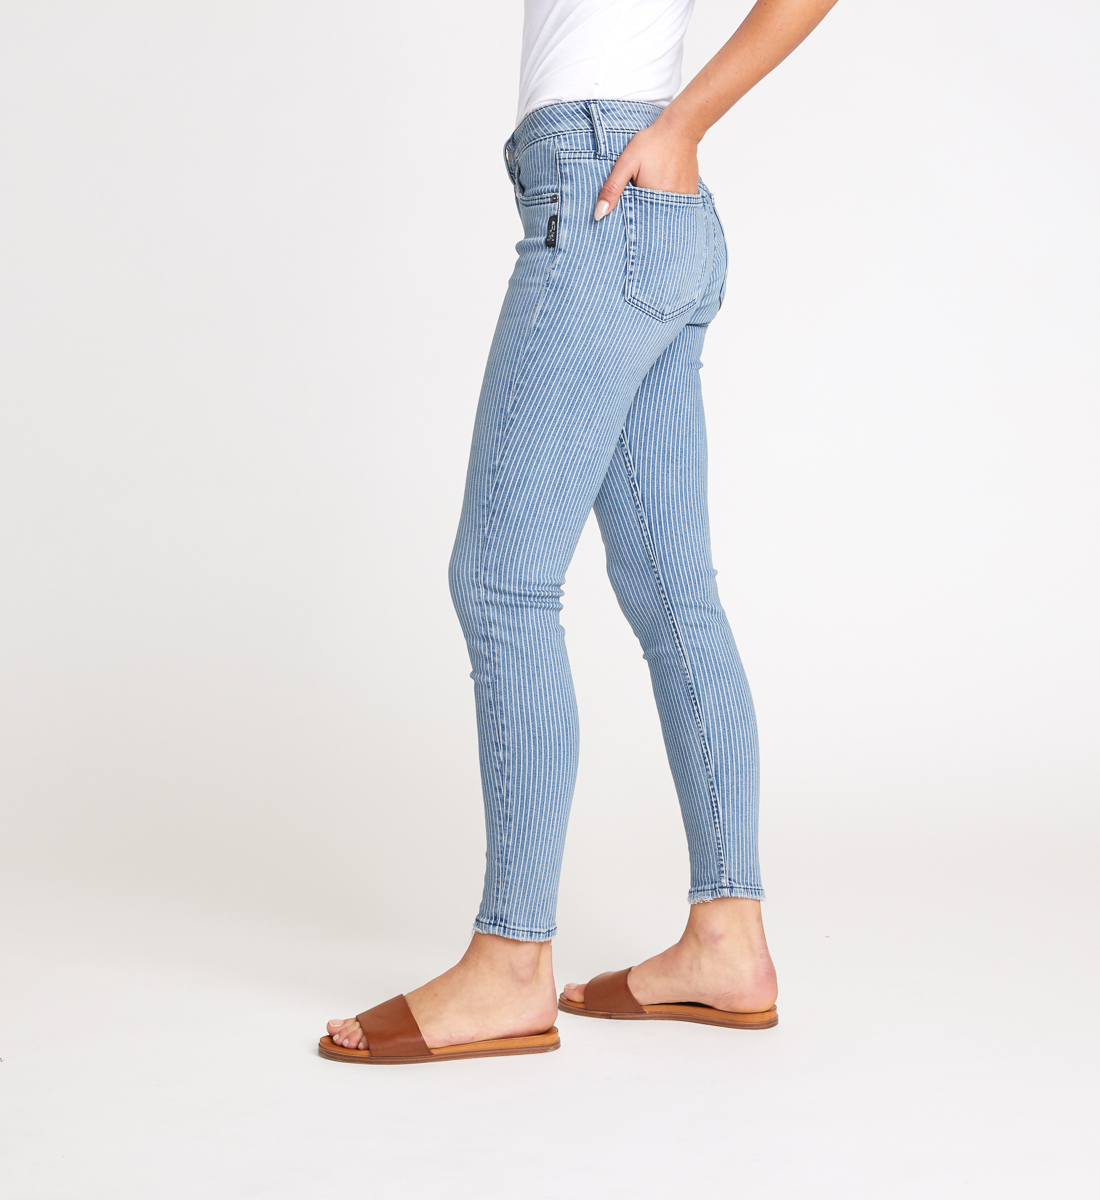 pinstripe skinny jeans womens